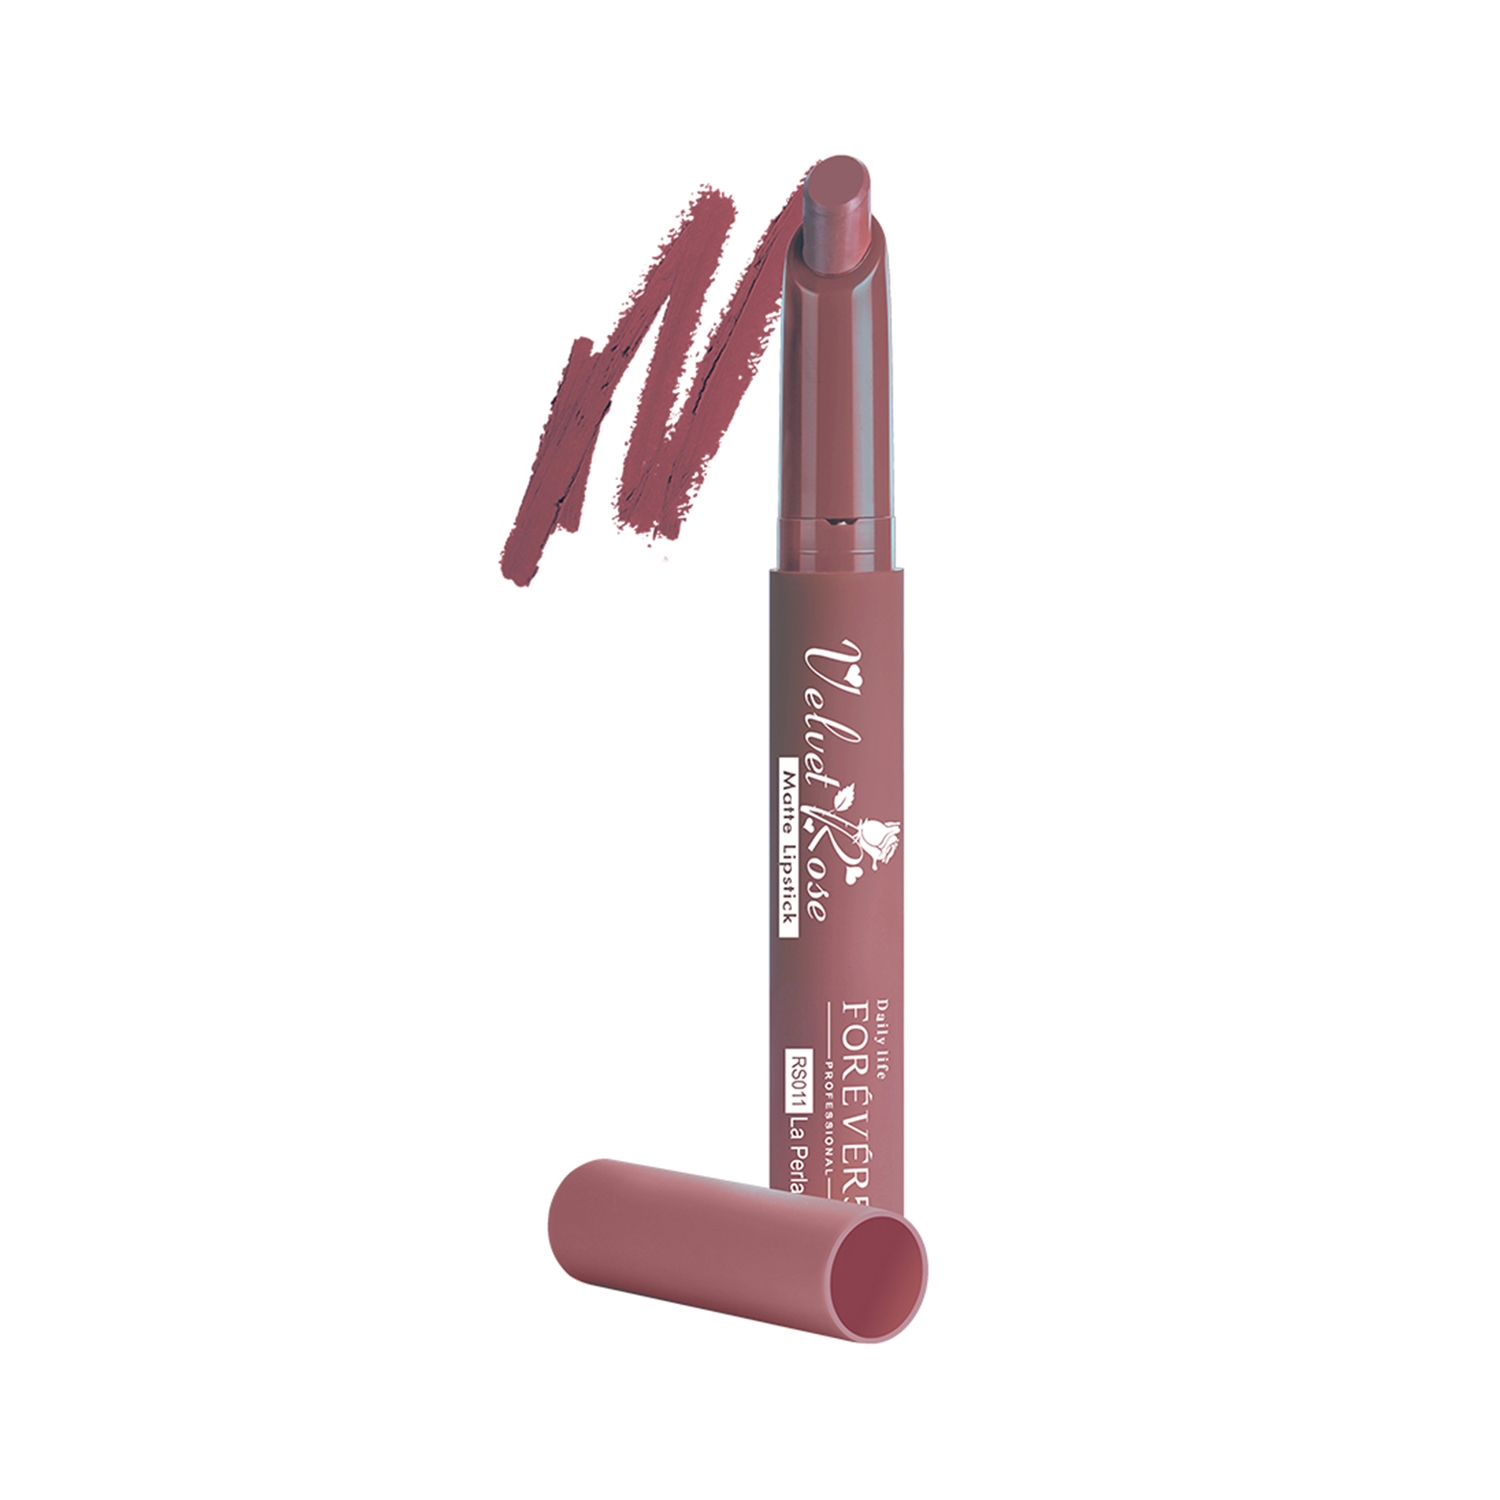 Daily Life Forever52 Pro Artist Multitasker Lipstick Palette MPL001 - Multi  Color (36g)